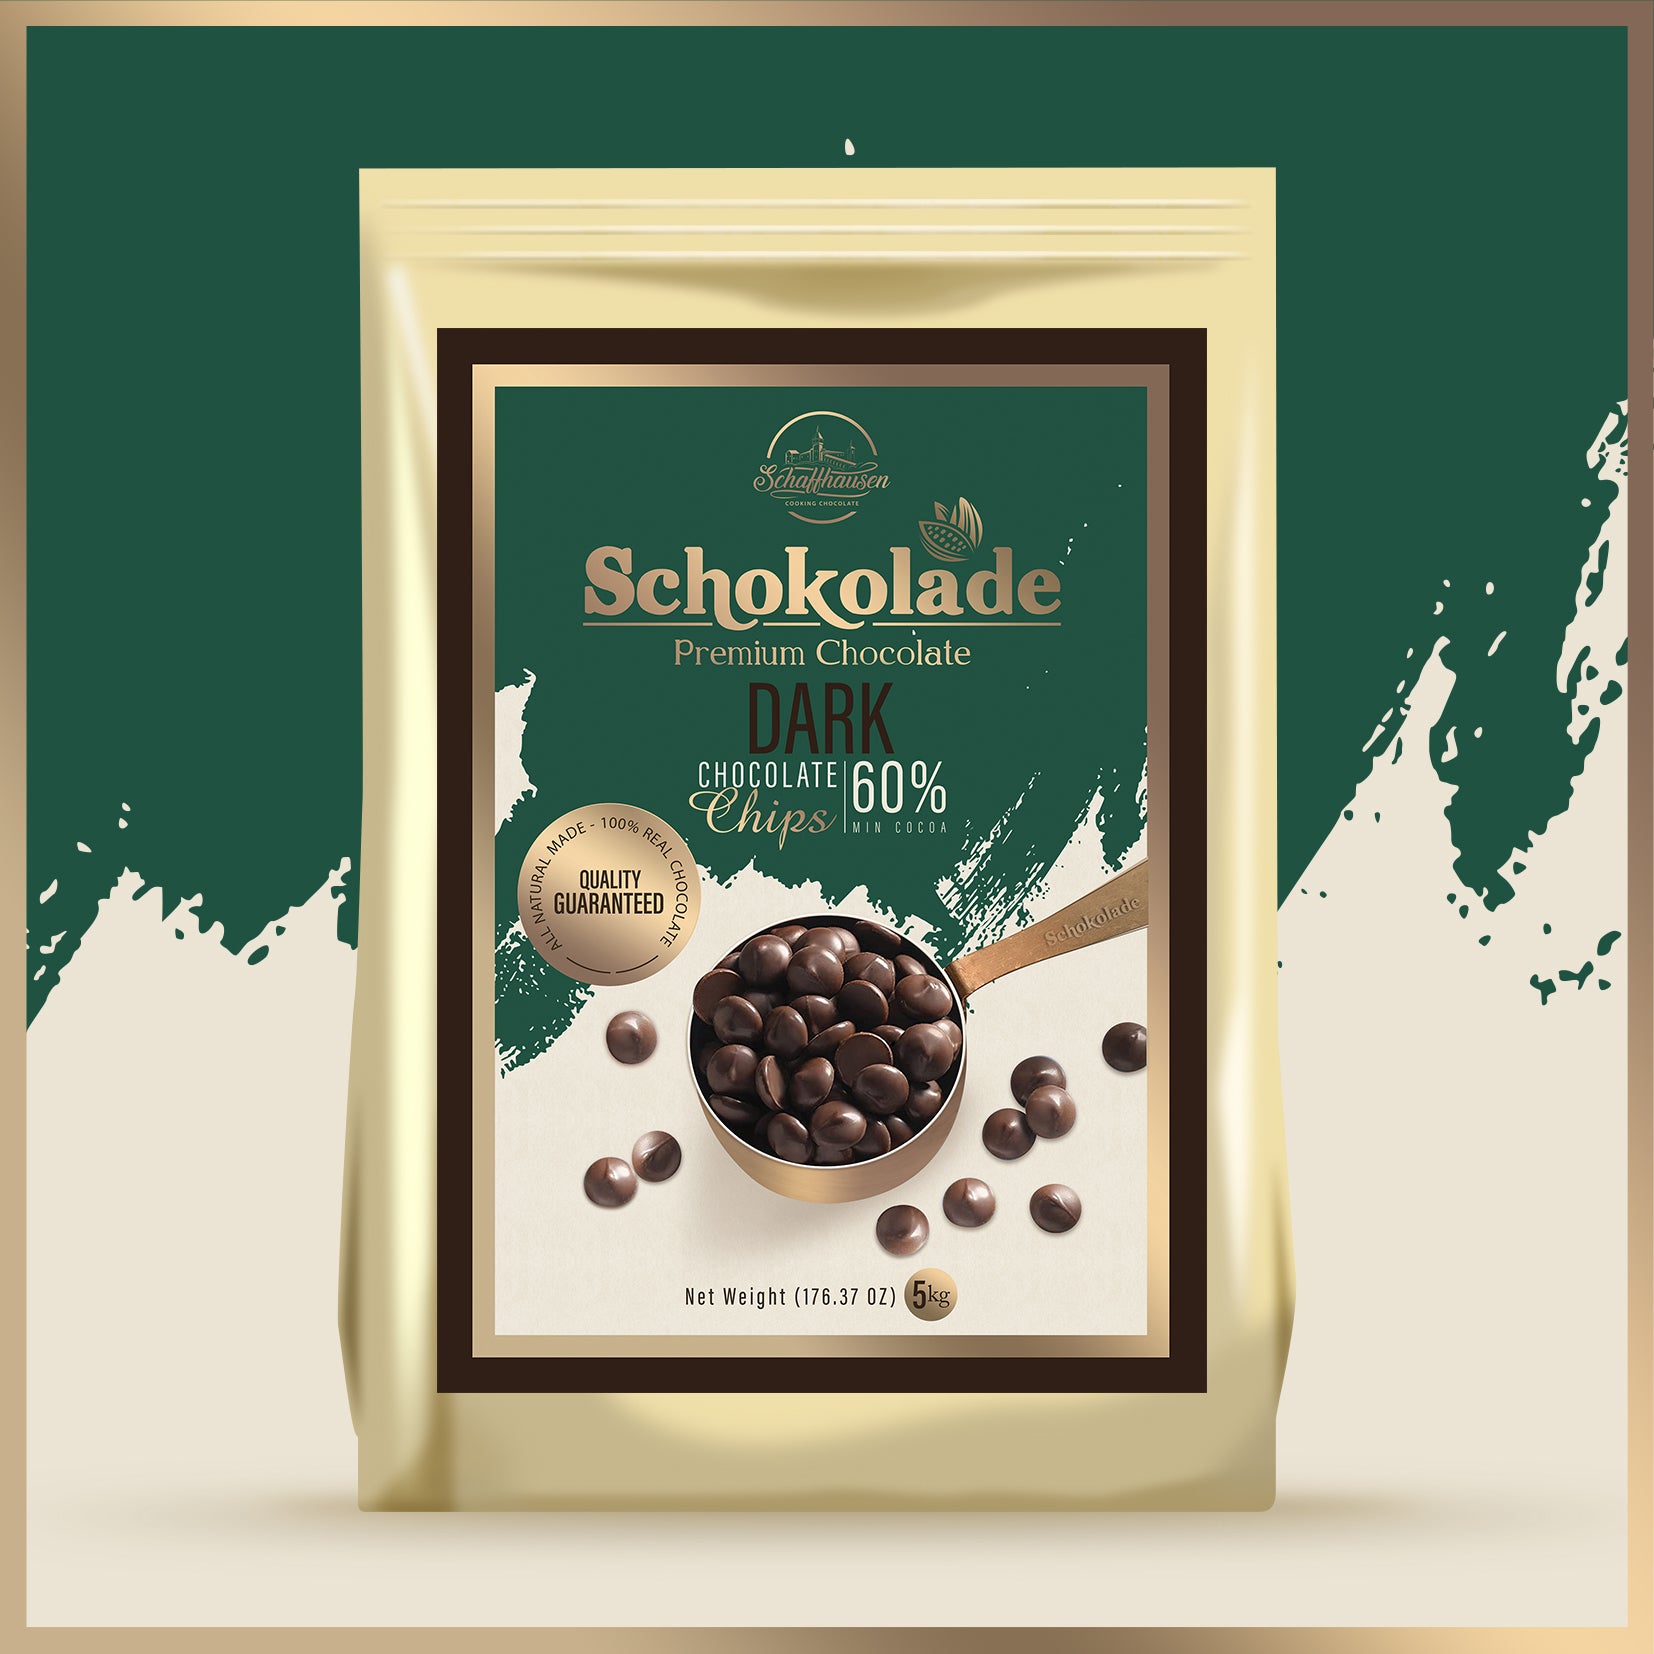 Schokolade Dark Chocolate Chips 60% Cocoa